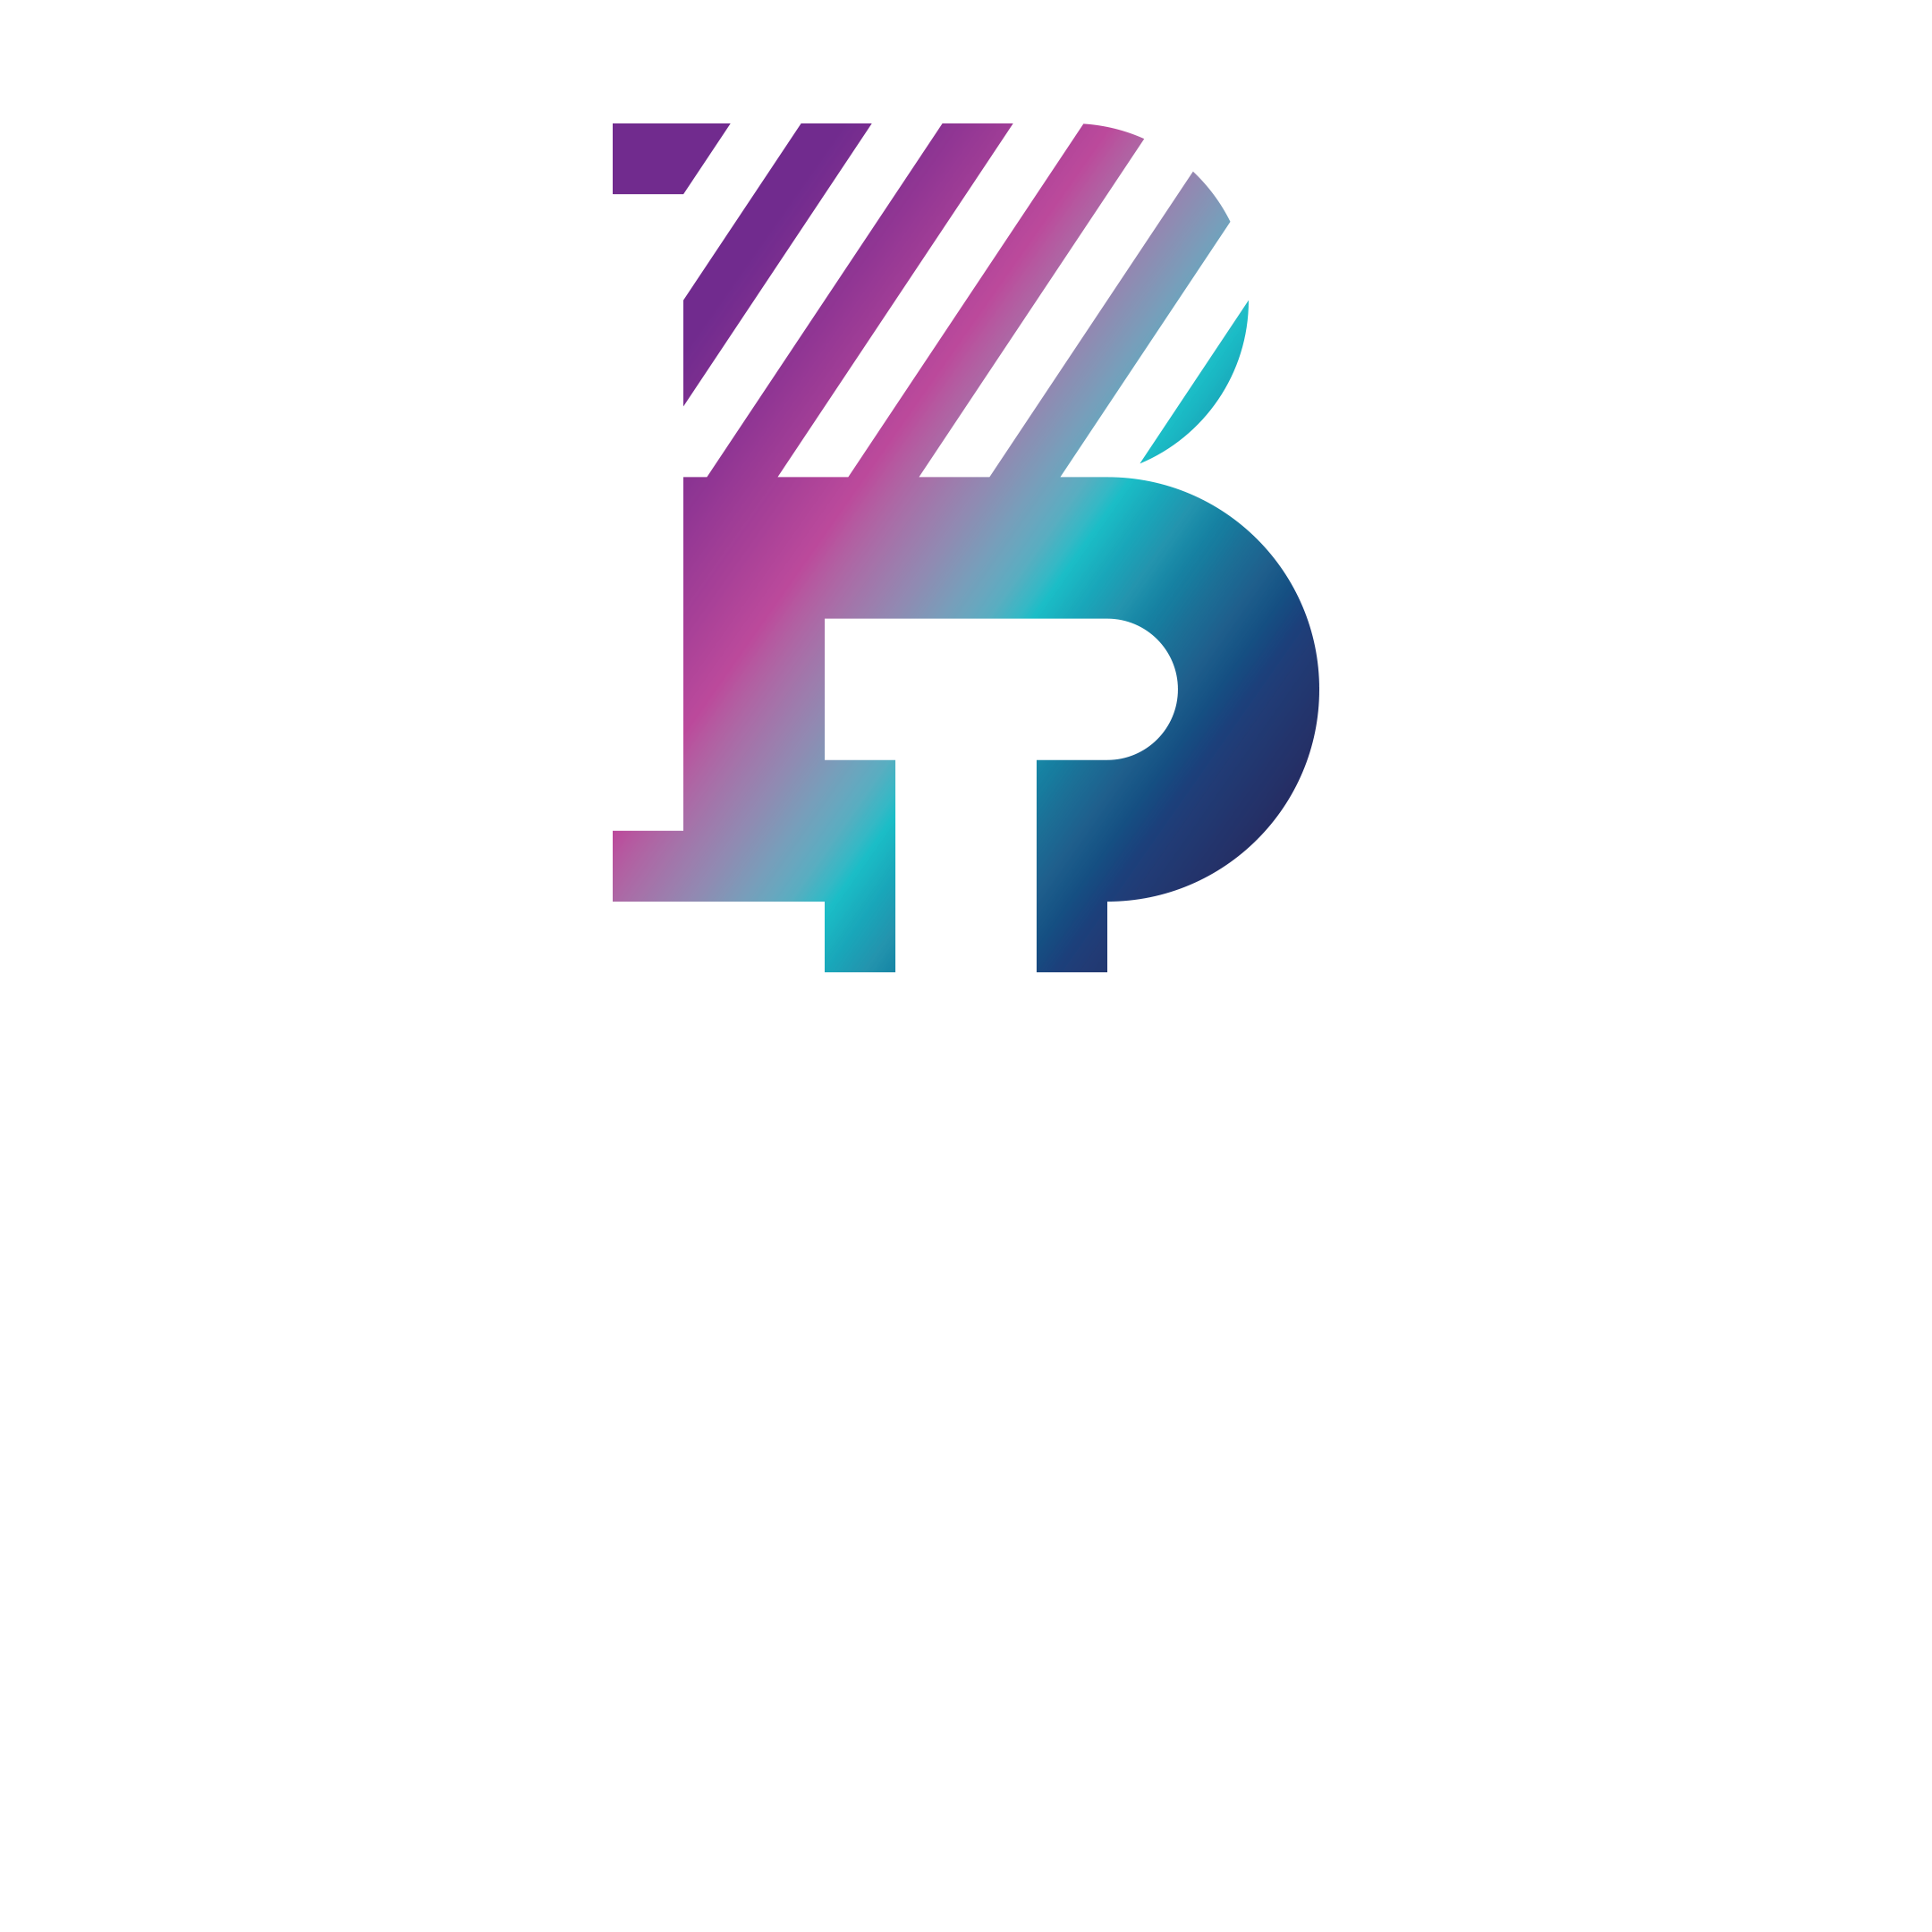 El club del Bitcoin